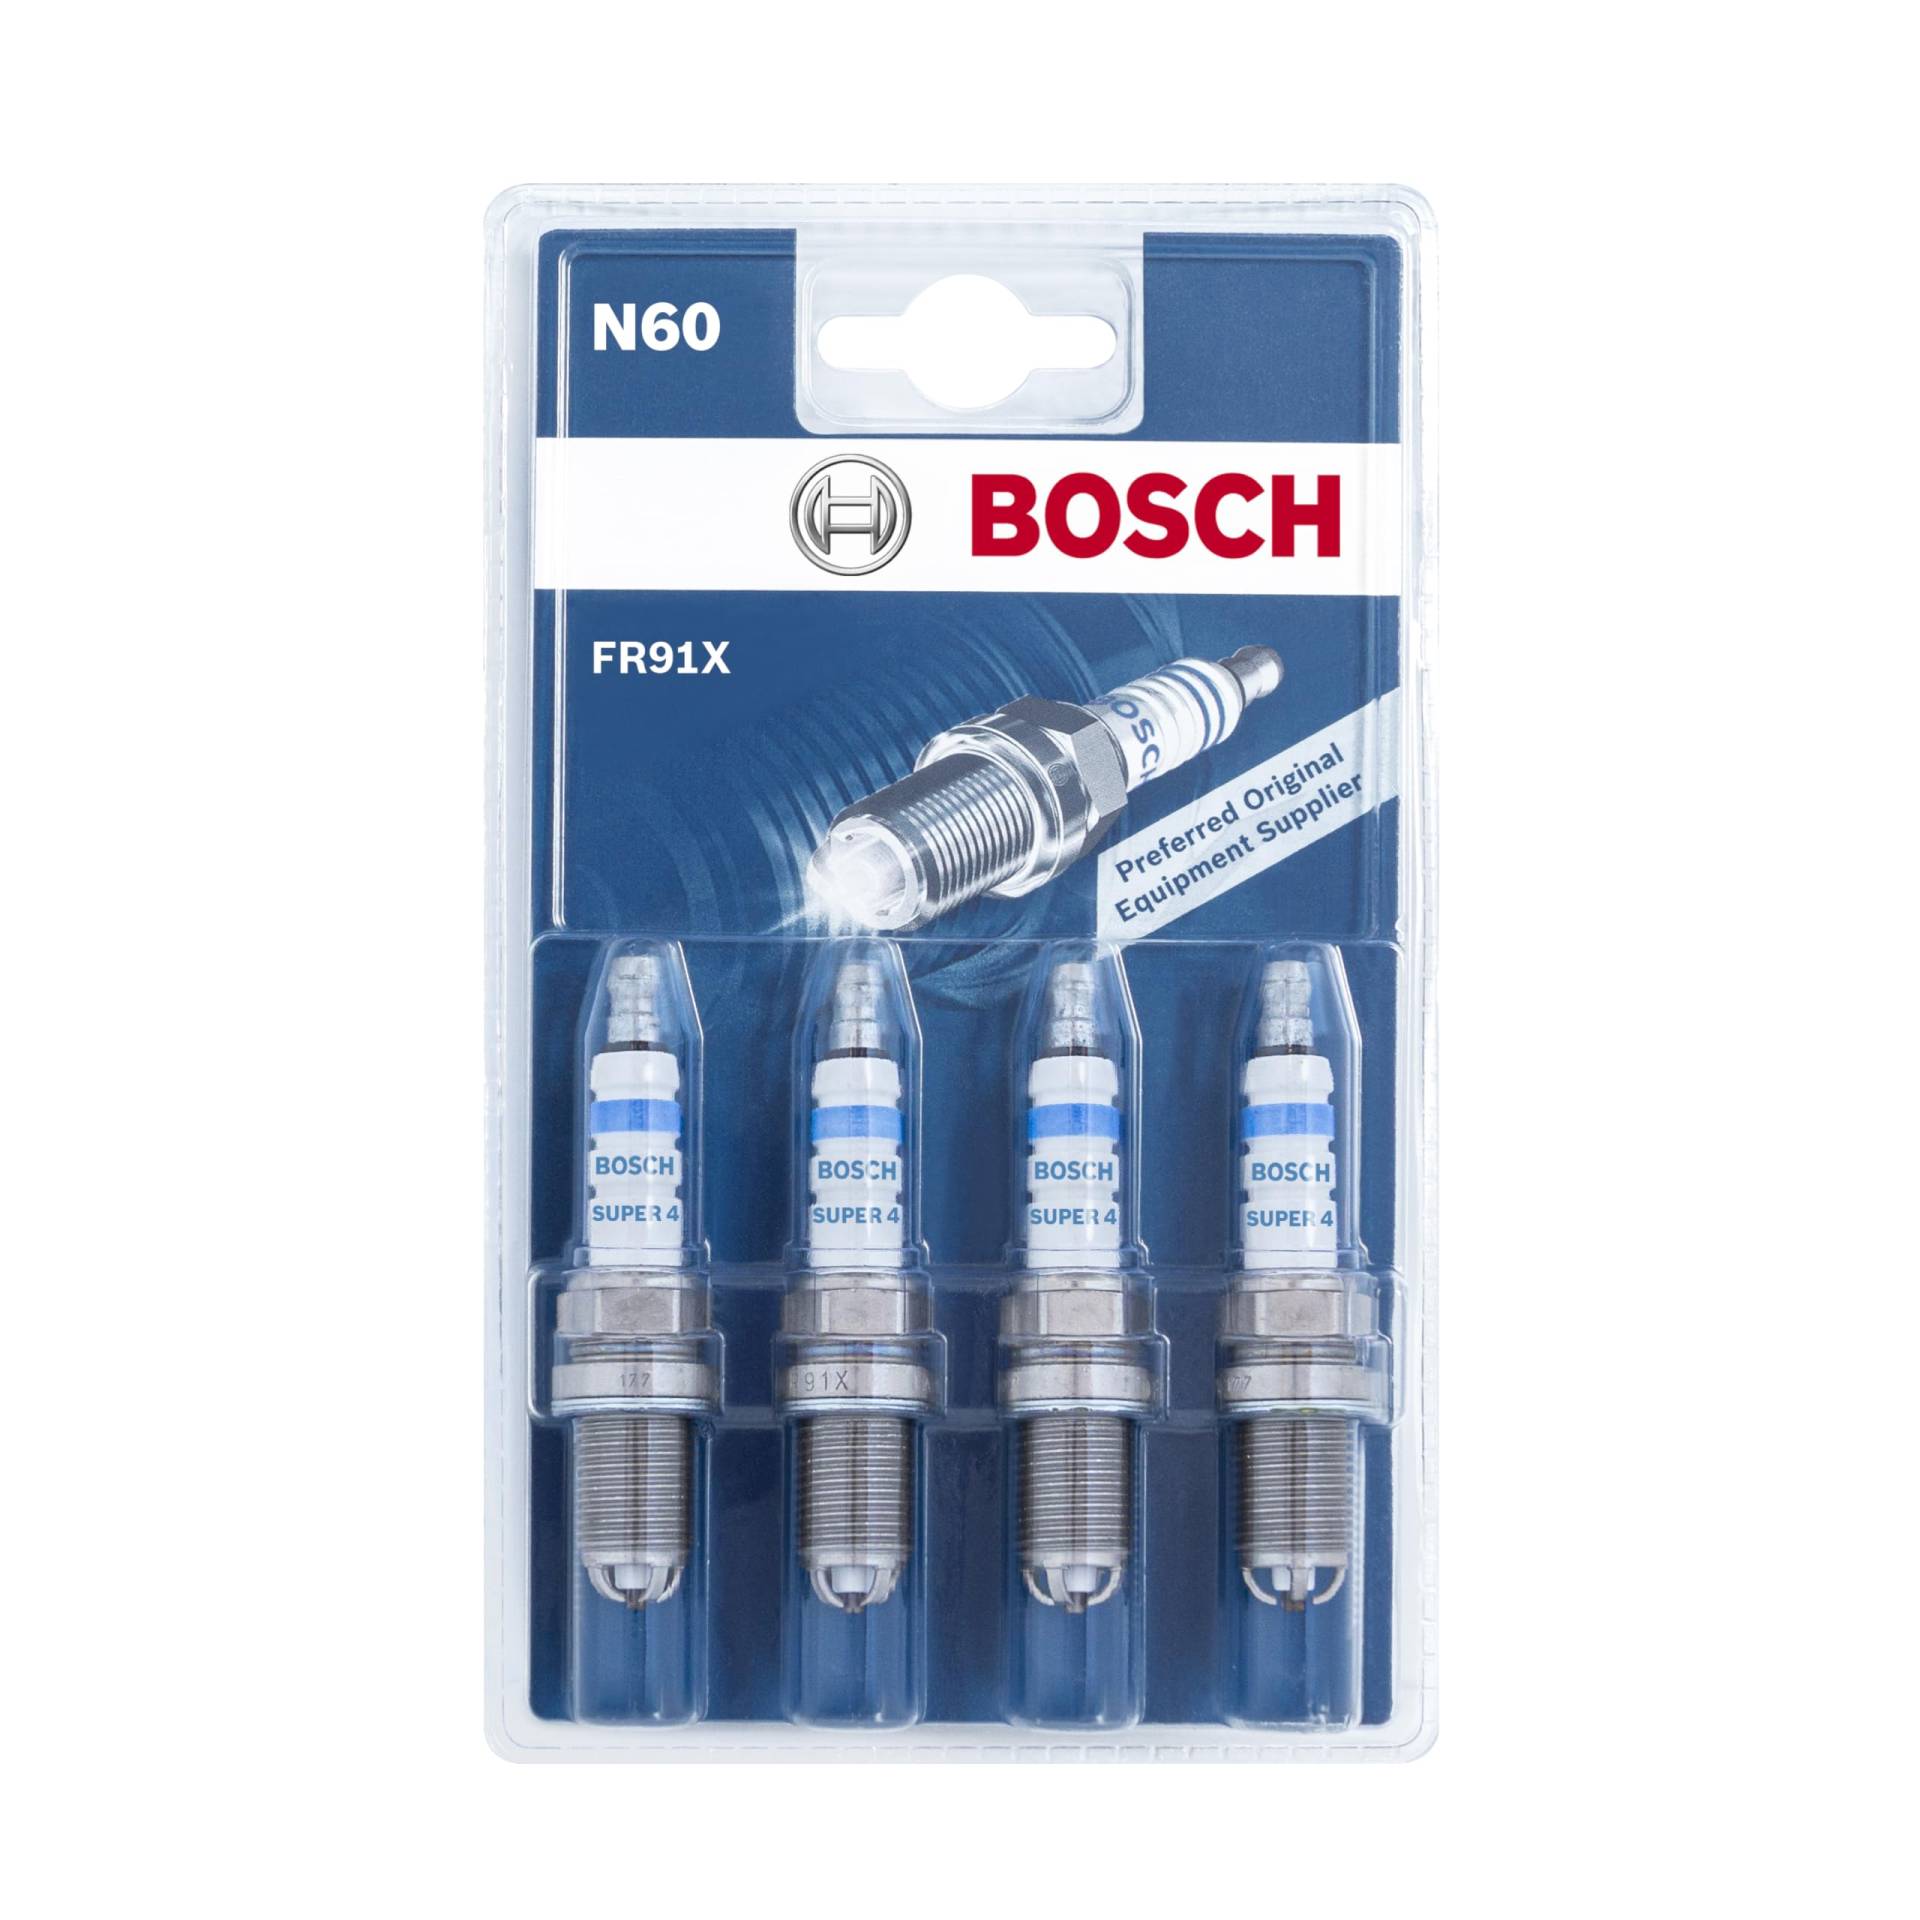 Bosch Fahrzeugspezifisch FR91X (N60) - Zündkerzen Super 4 - 4er Set von Bosch Automotive